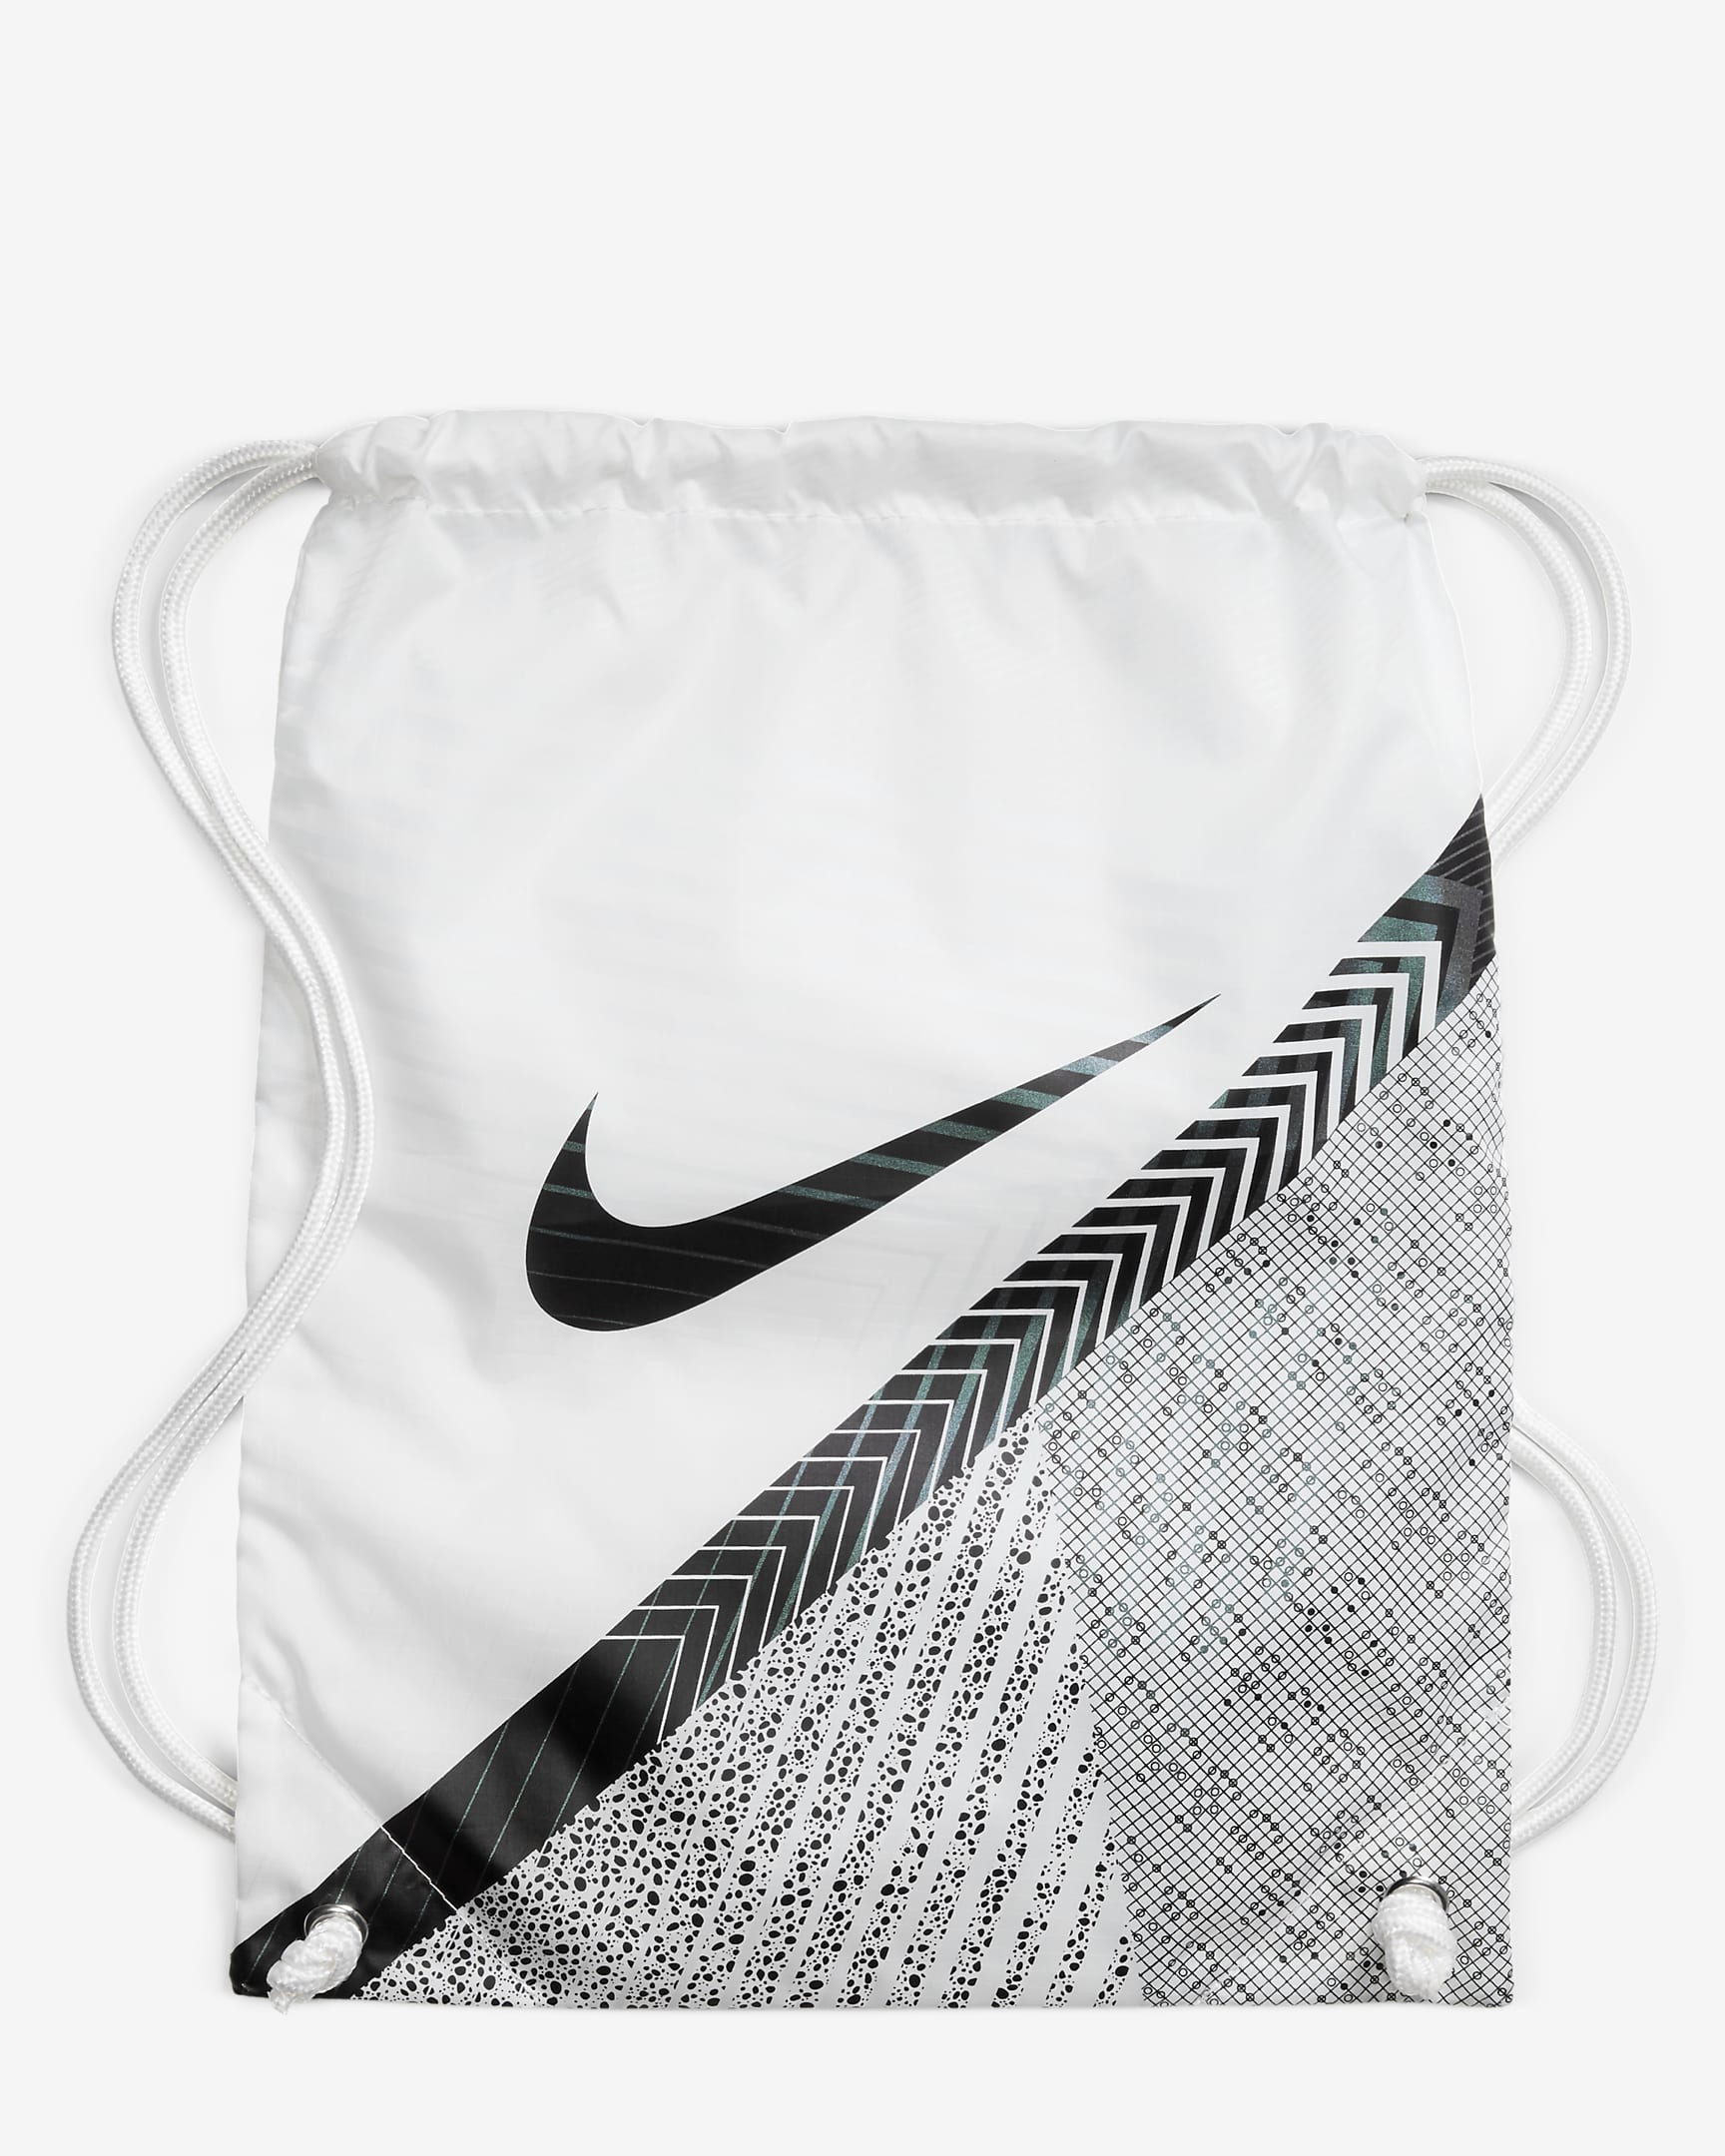 Nike Mercurial Vapor 13 Elite MDS AG-PRO Artificial-Grass Soccer Cleats ...